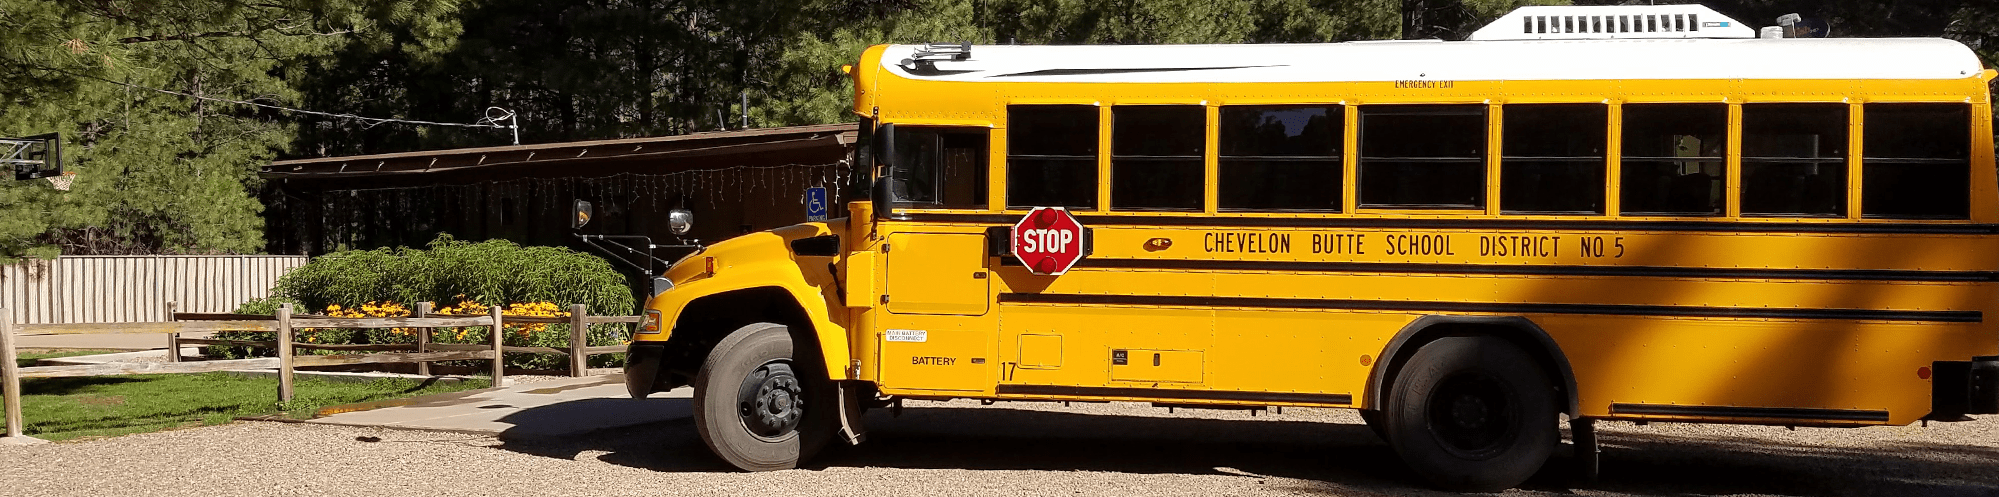 Chevelon Butte Elementary School District #5 school bus